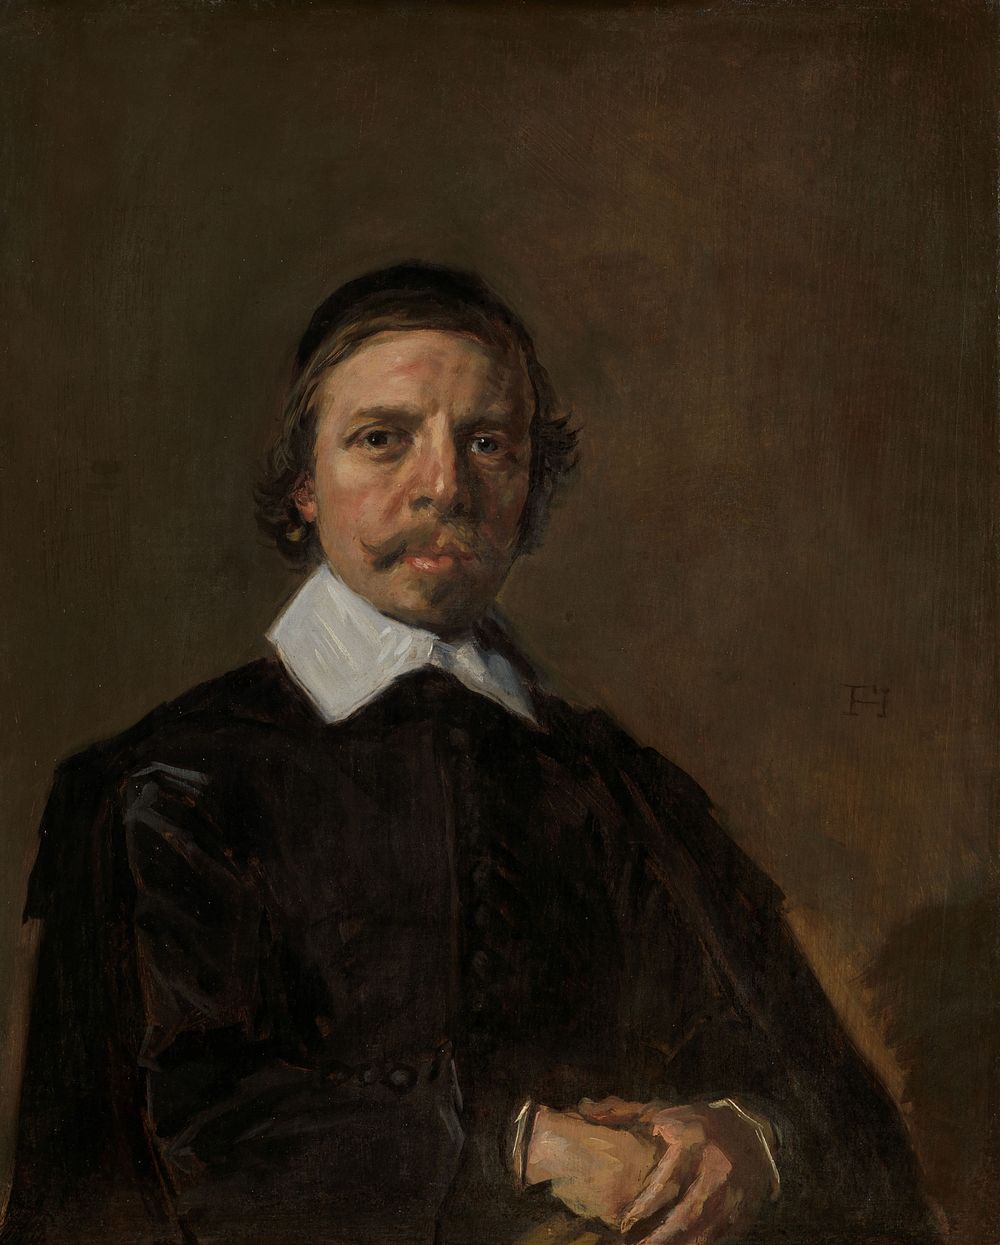 Portrait of a Man, possibly a Clergyman (c. 1657 - c. 1660) by Frans Hals